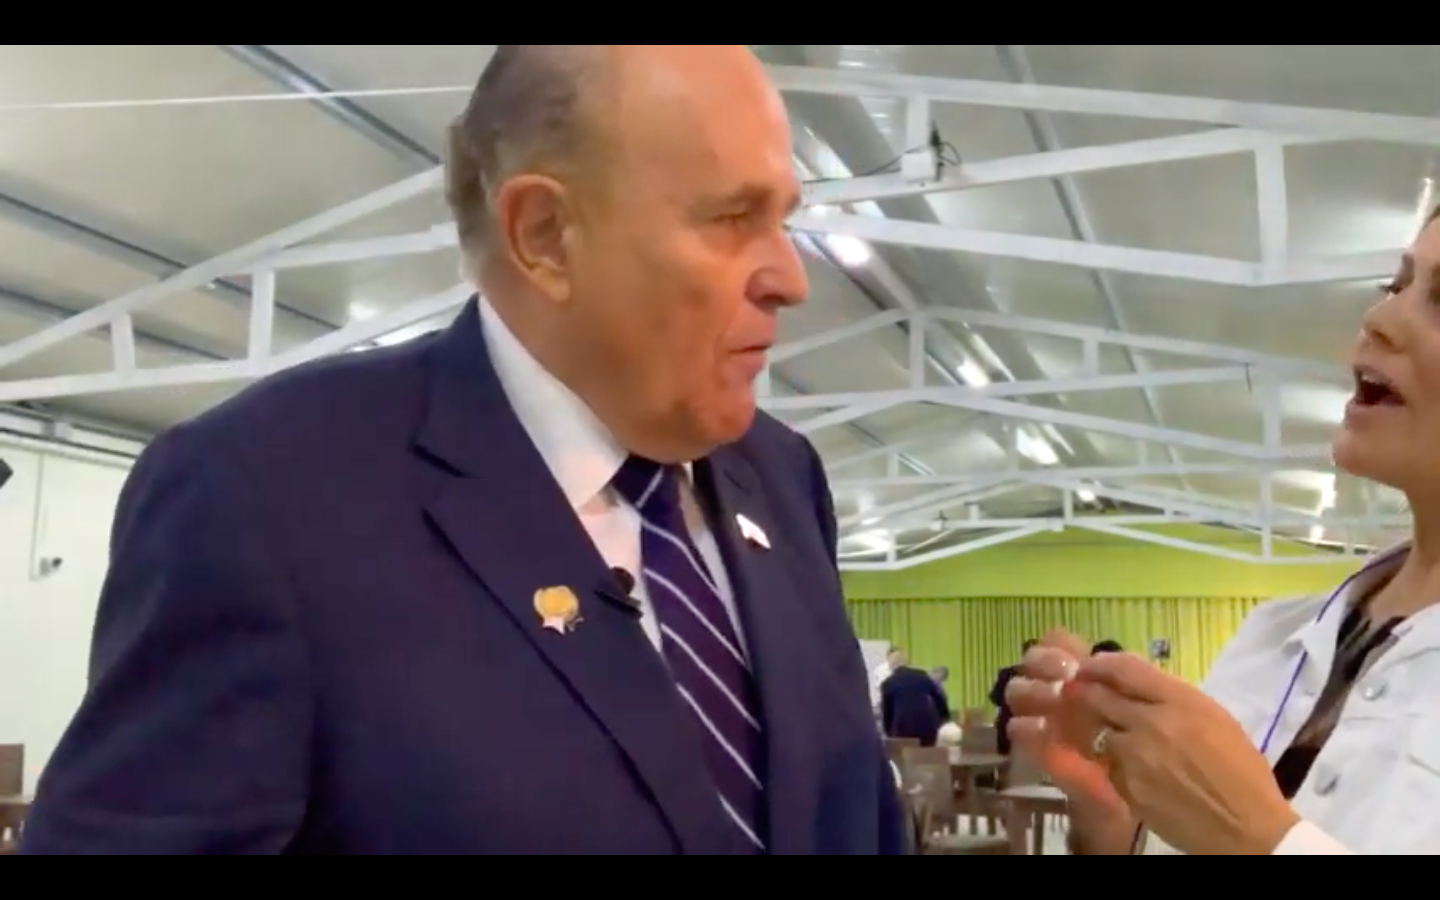 Debbie Aldrich Interviews Mayor Rudy Giuliani At MEK #FreeIran Summit In Albania - Tsarizm